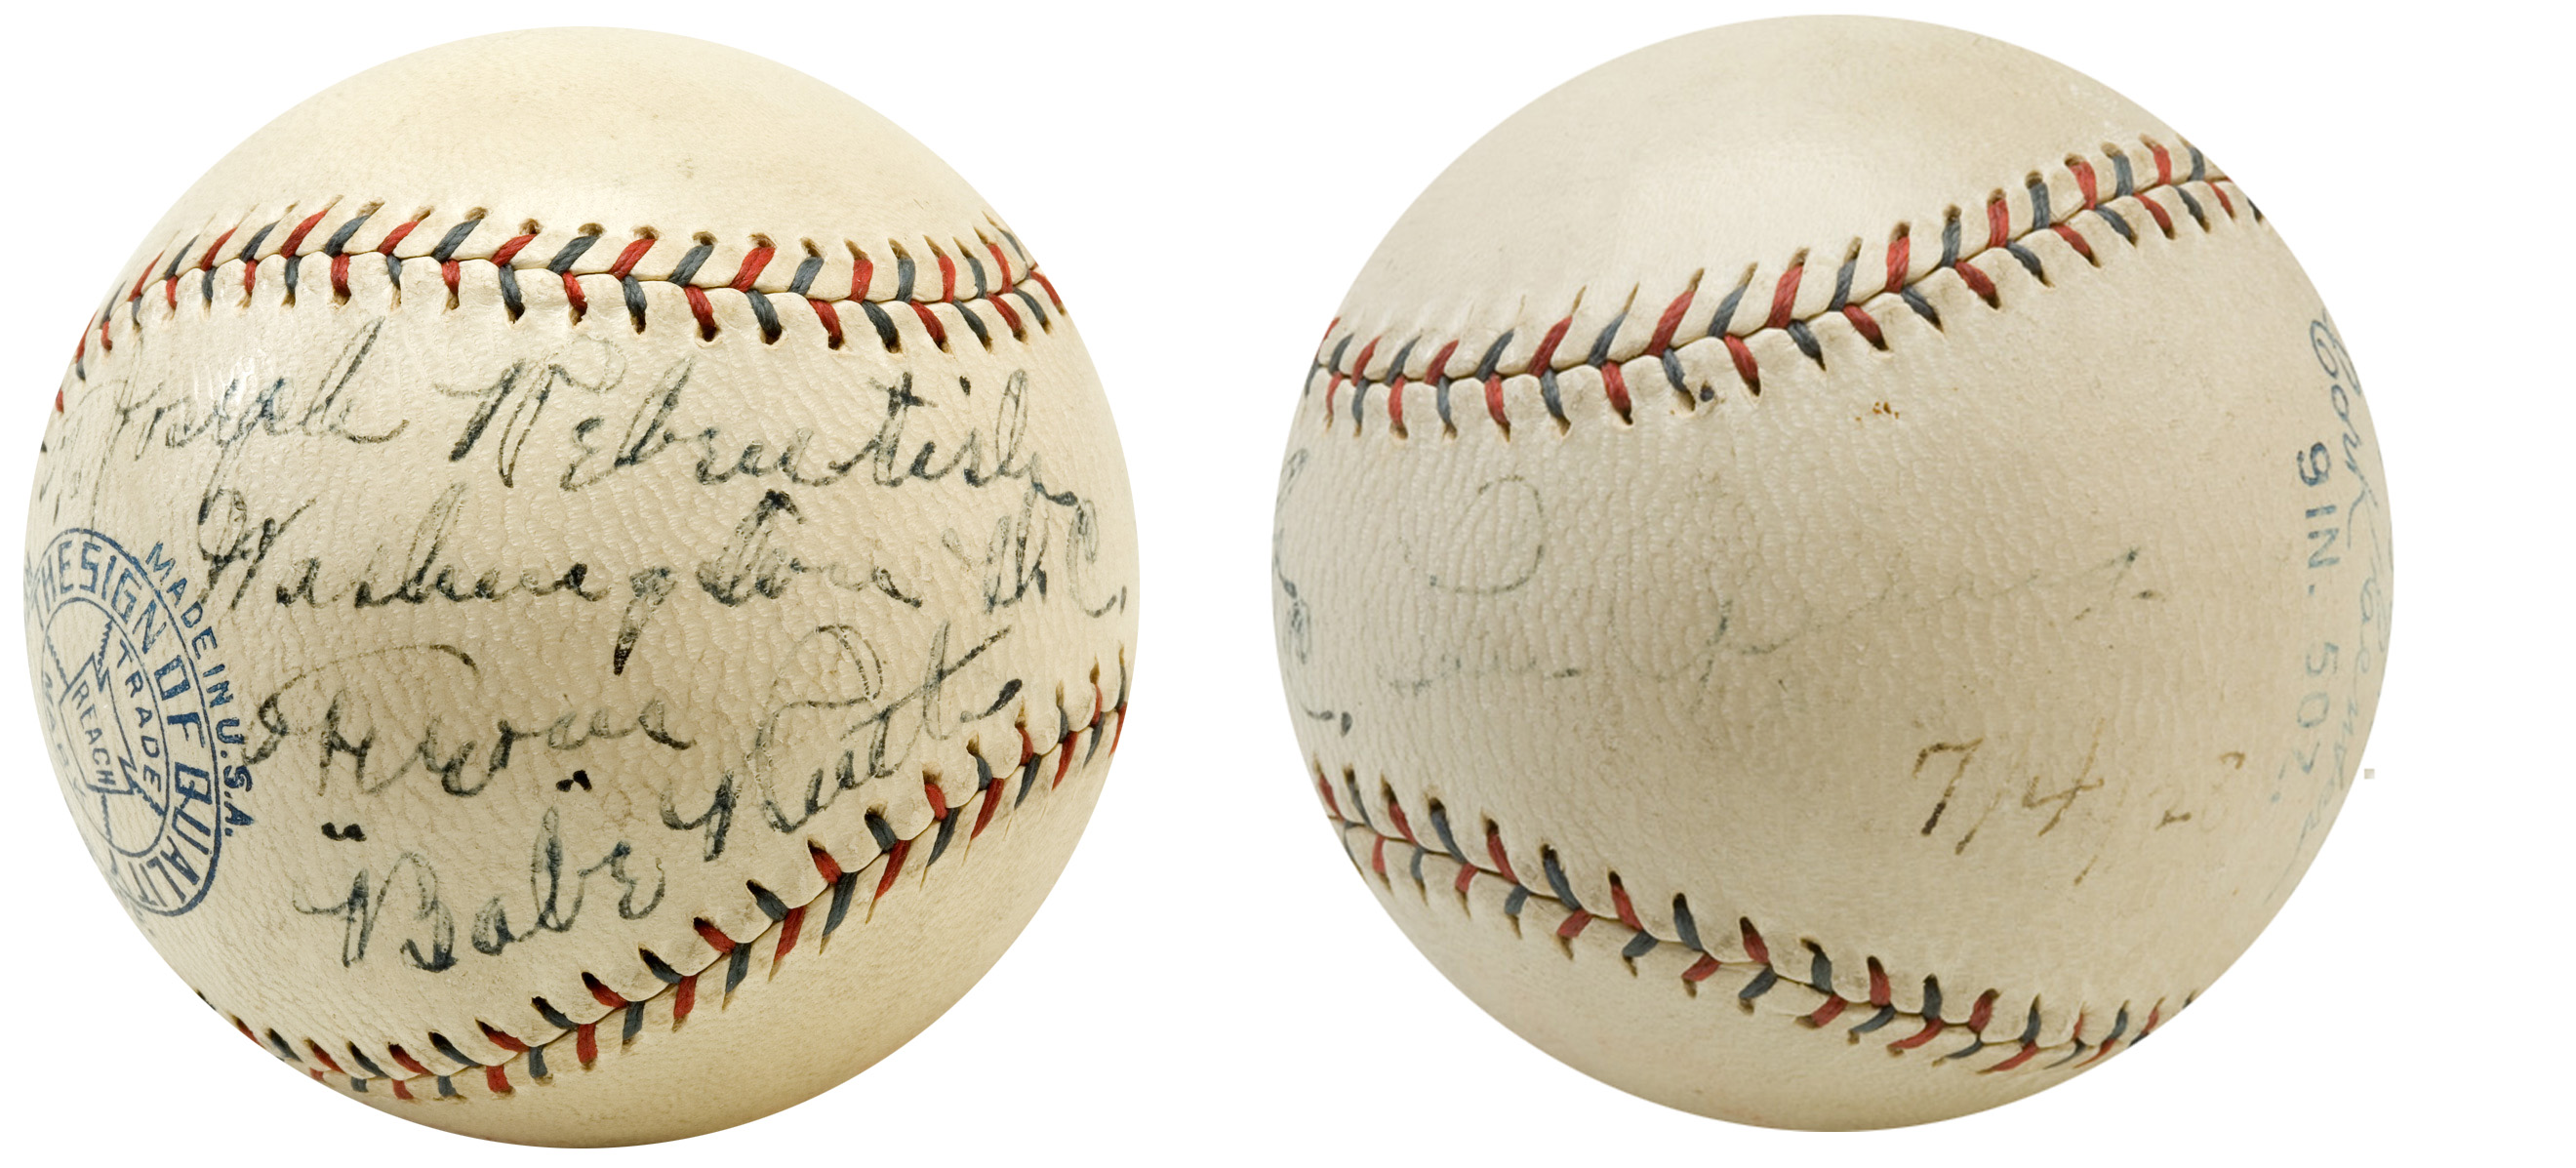 Babe Ruth Autograph Babe Ruth Signed Baseball